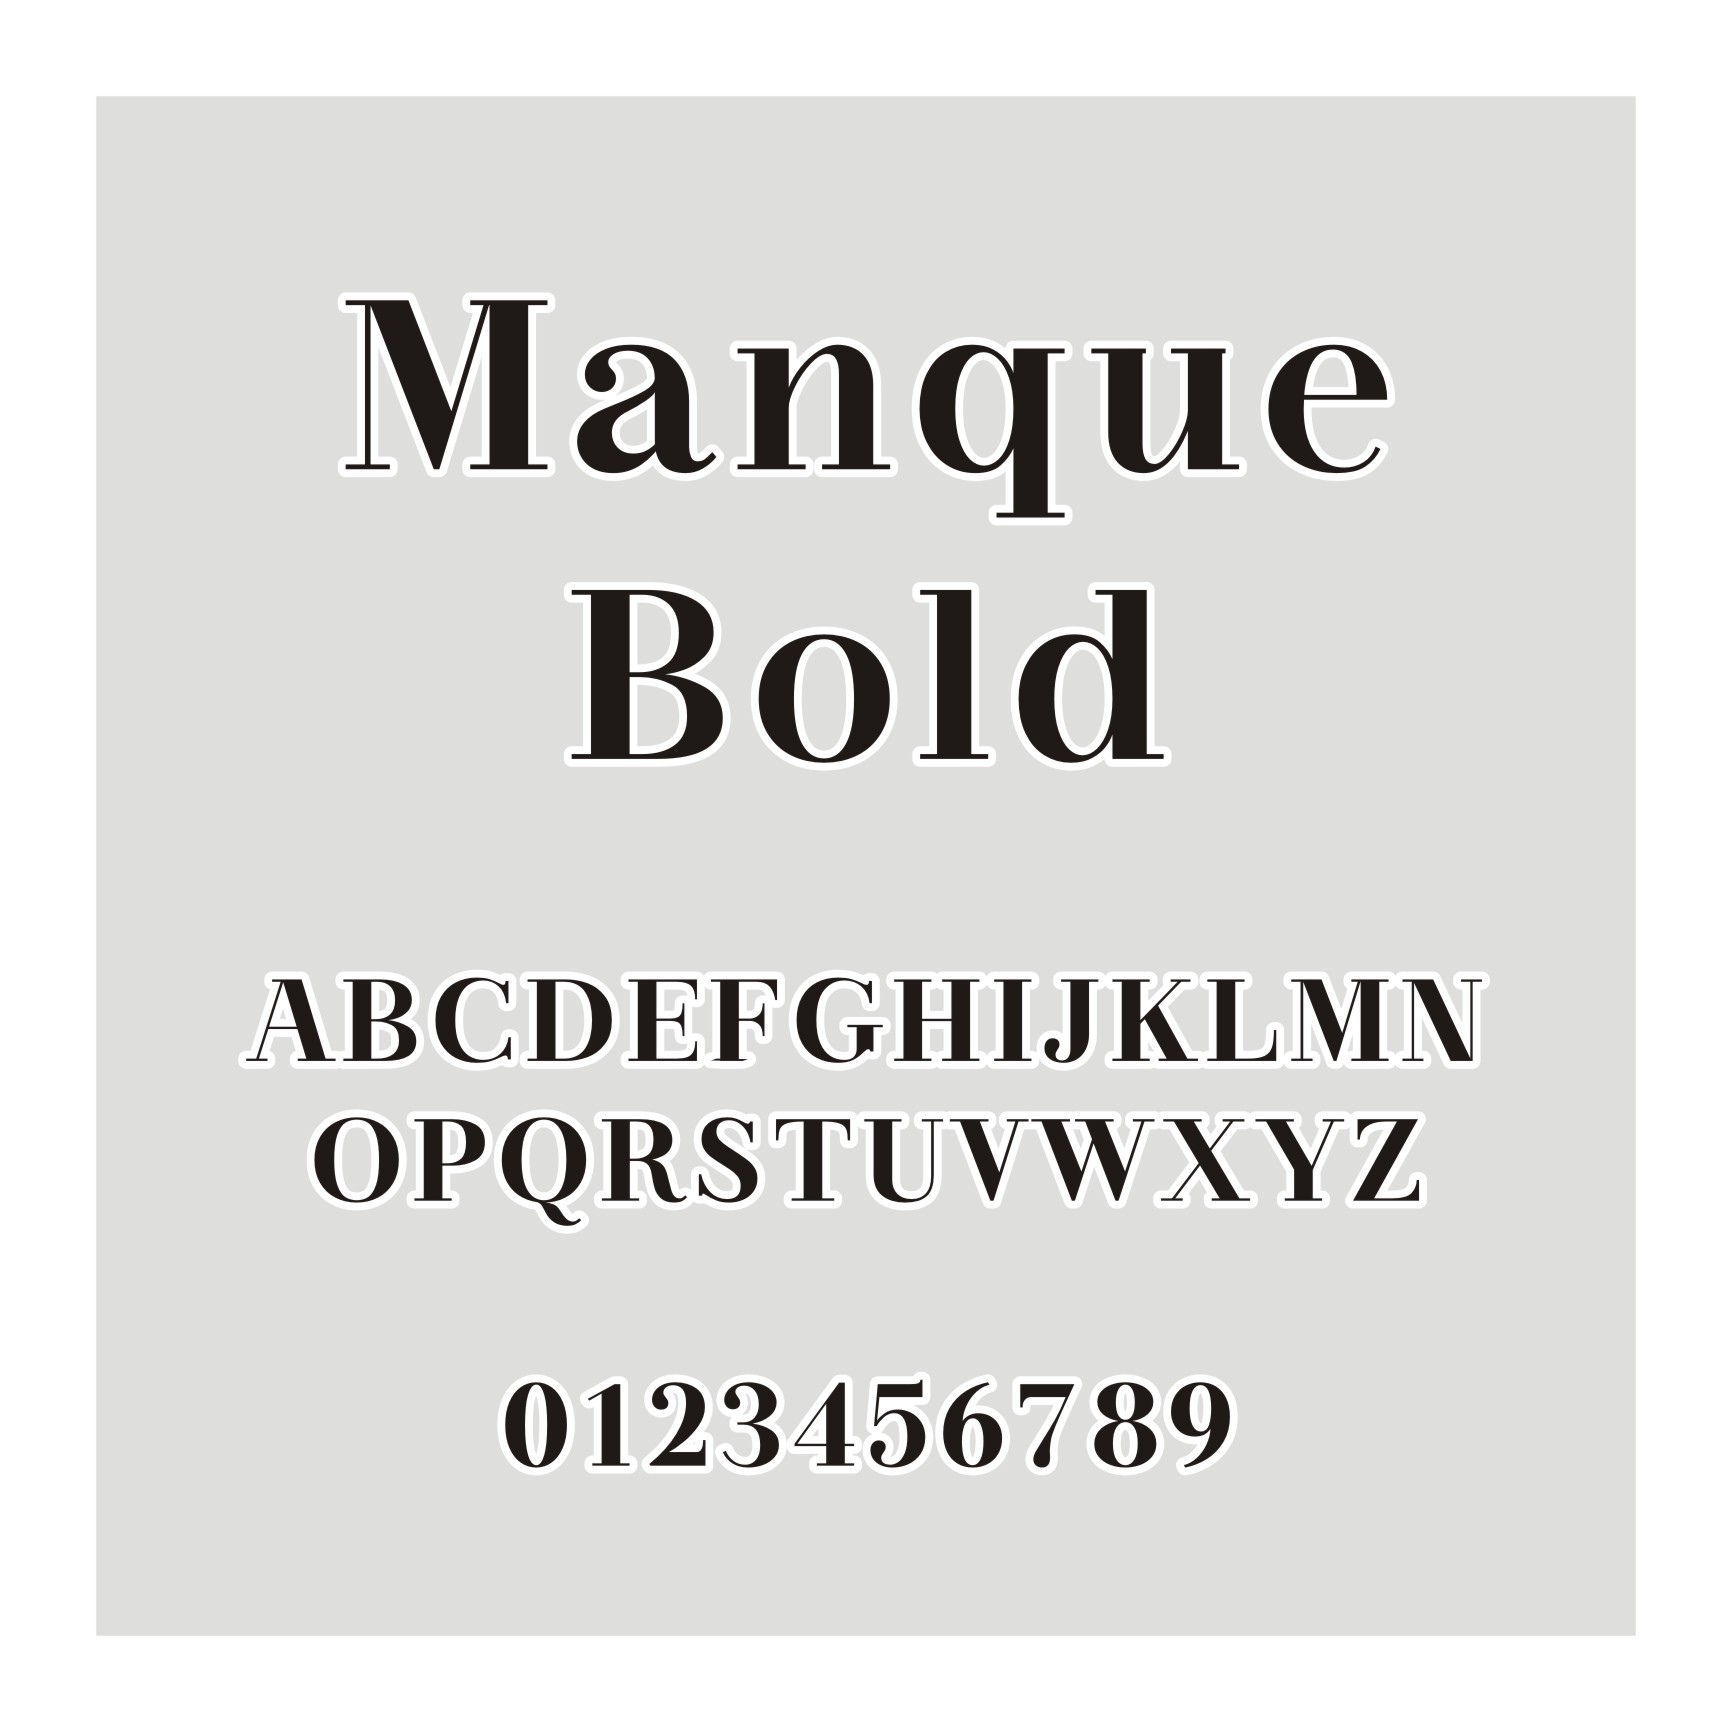 Manque Bold